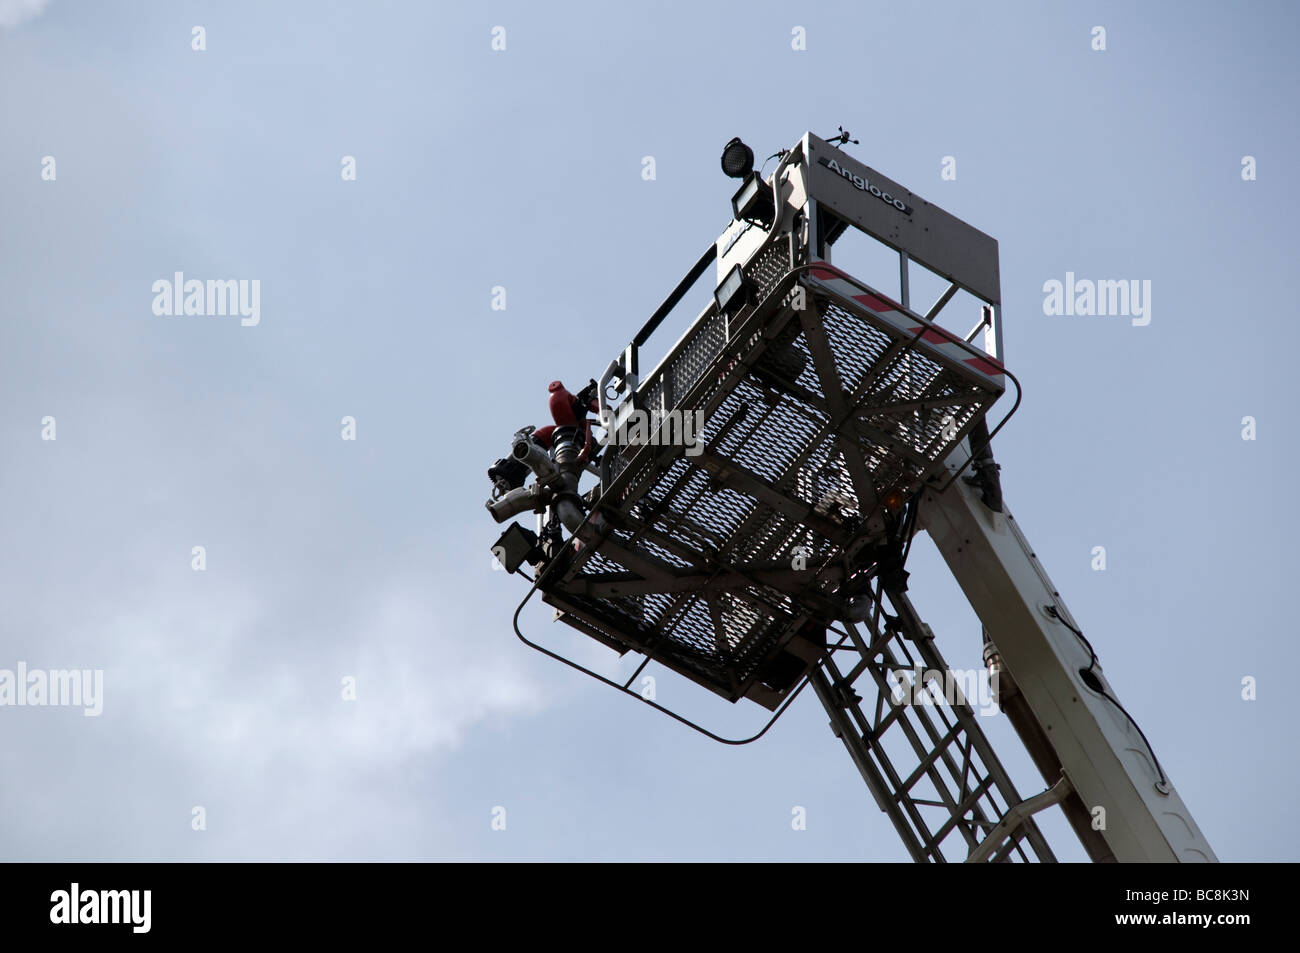 Firemans  hydraulic aerial platform on display in Derbyshire East Midlands England UK Stock Photo